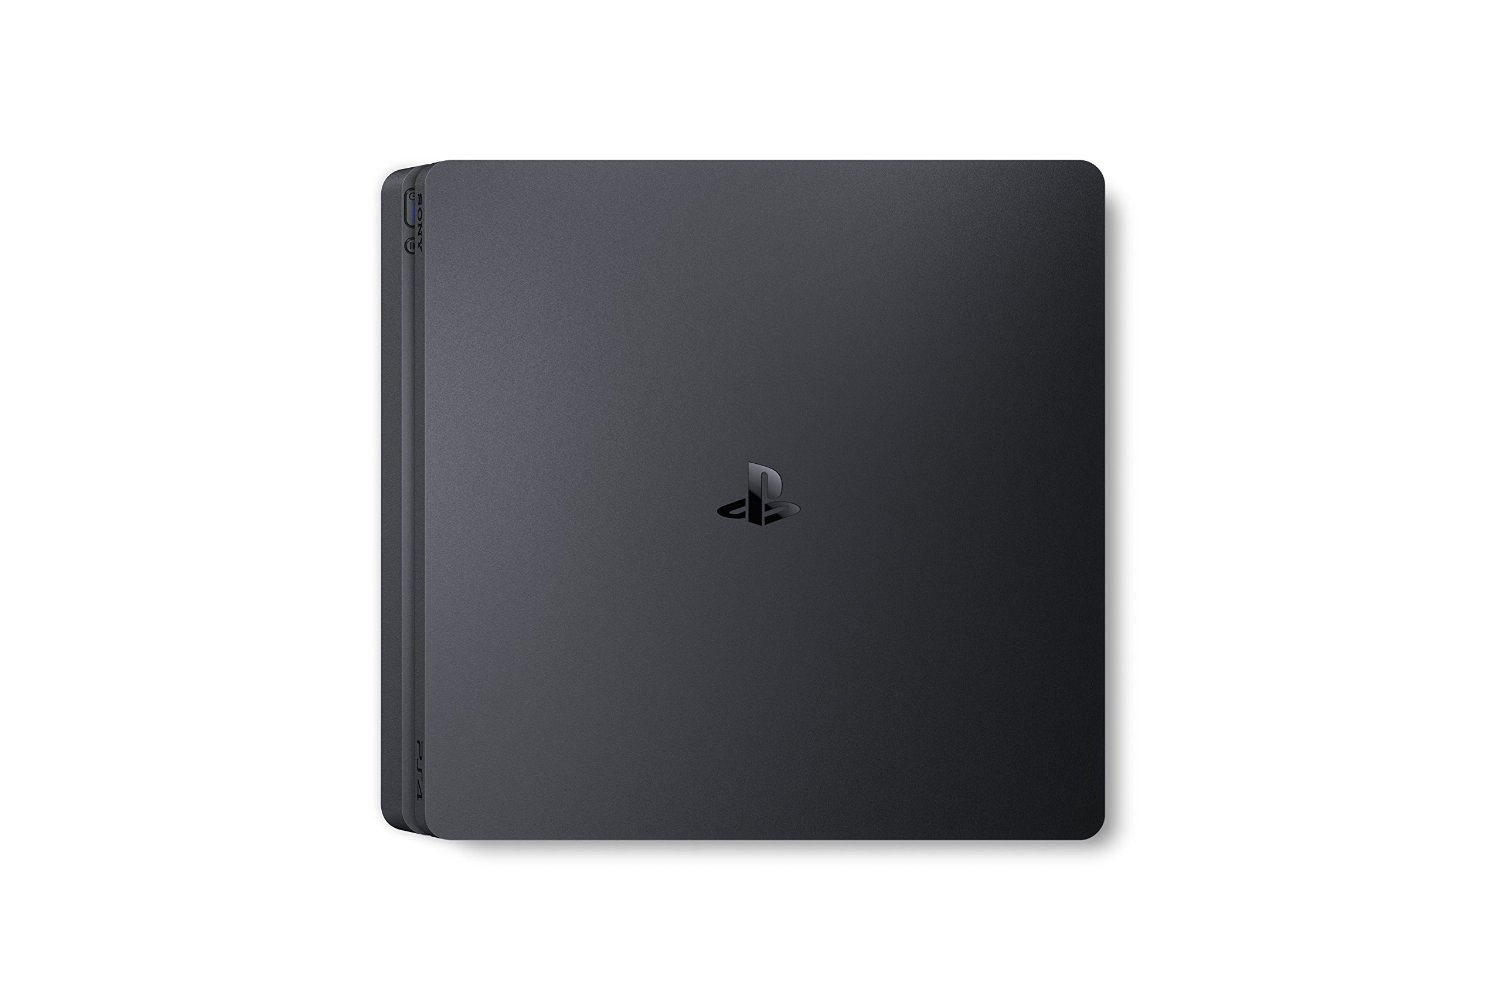 PlayStation 4 CUH-2000 Series 500GB HDD (Jet Black) - Bitcoin